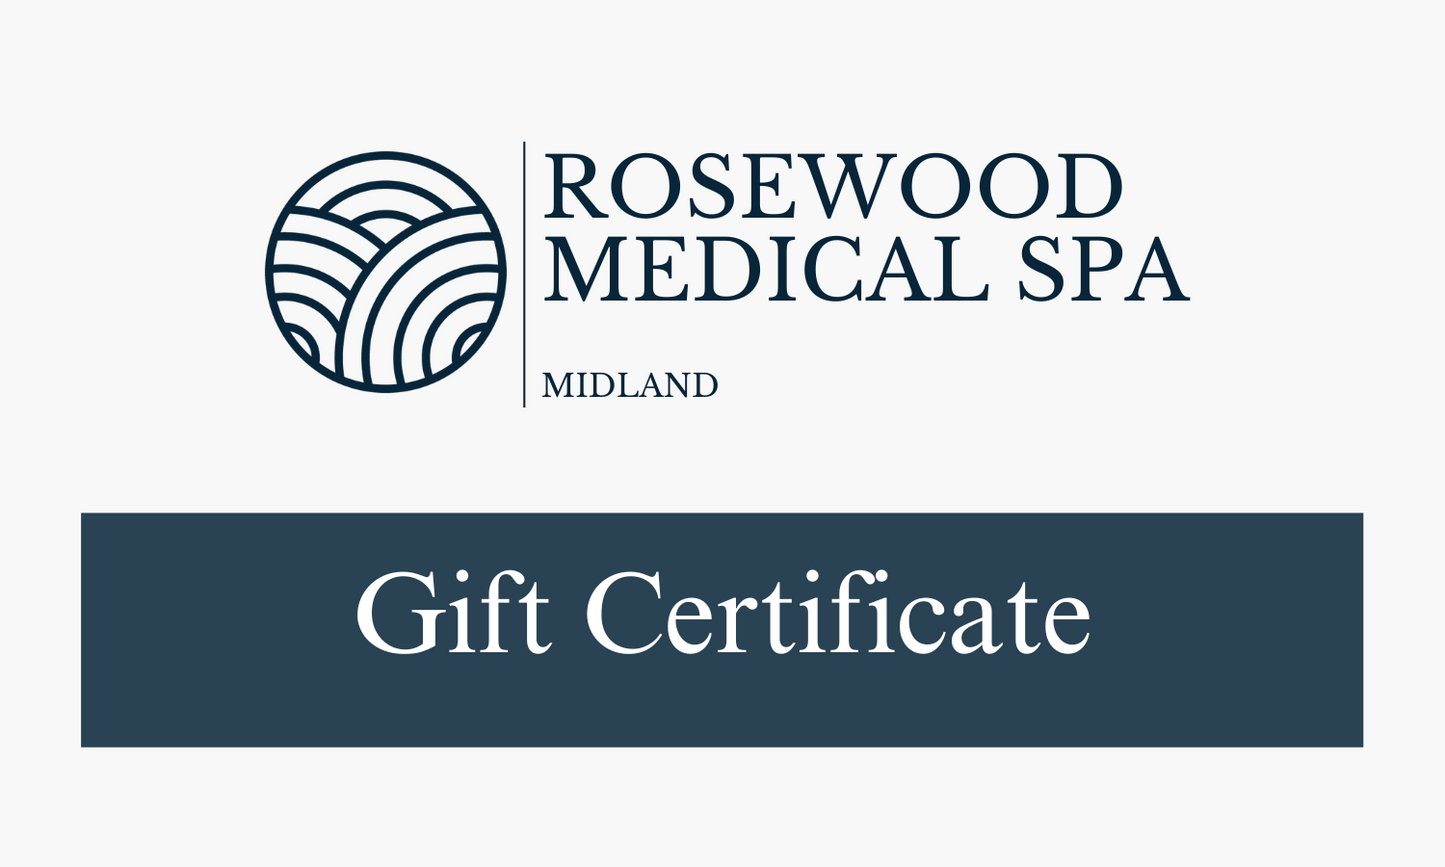 Rosewood Medical Spa Gift Certificate